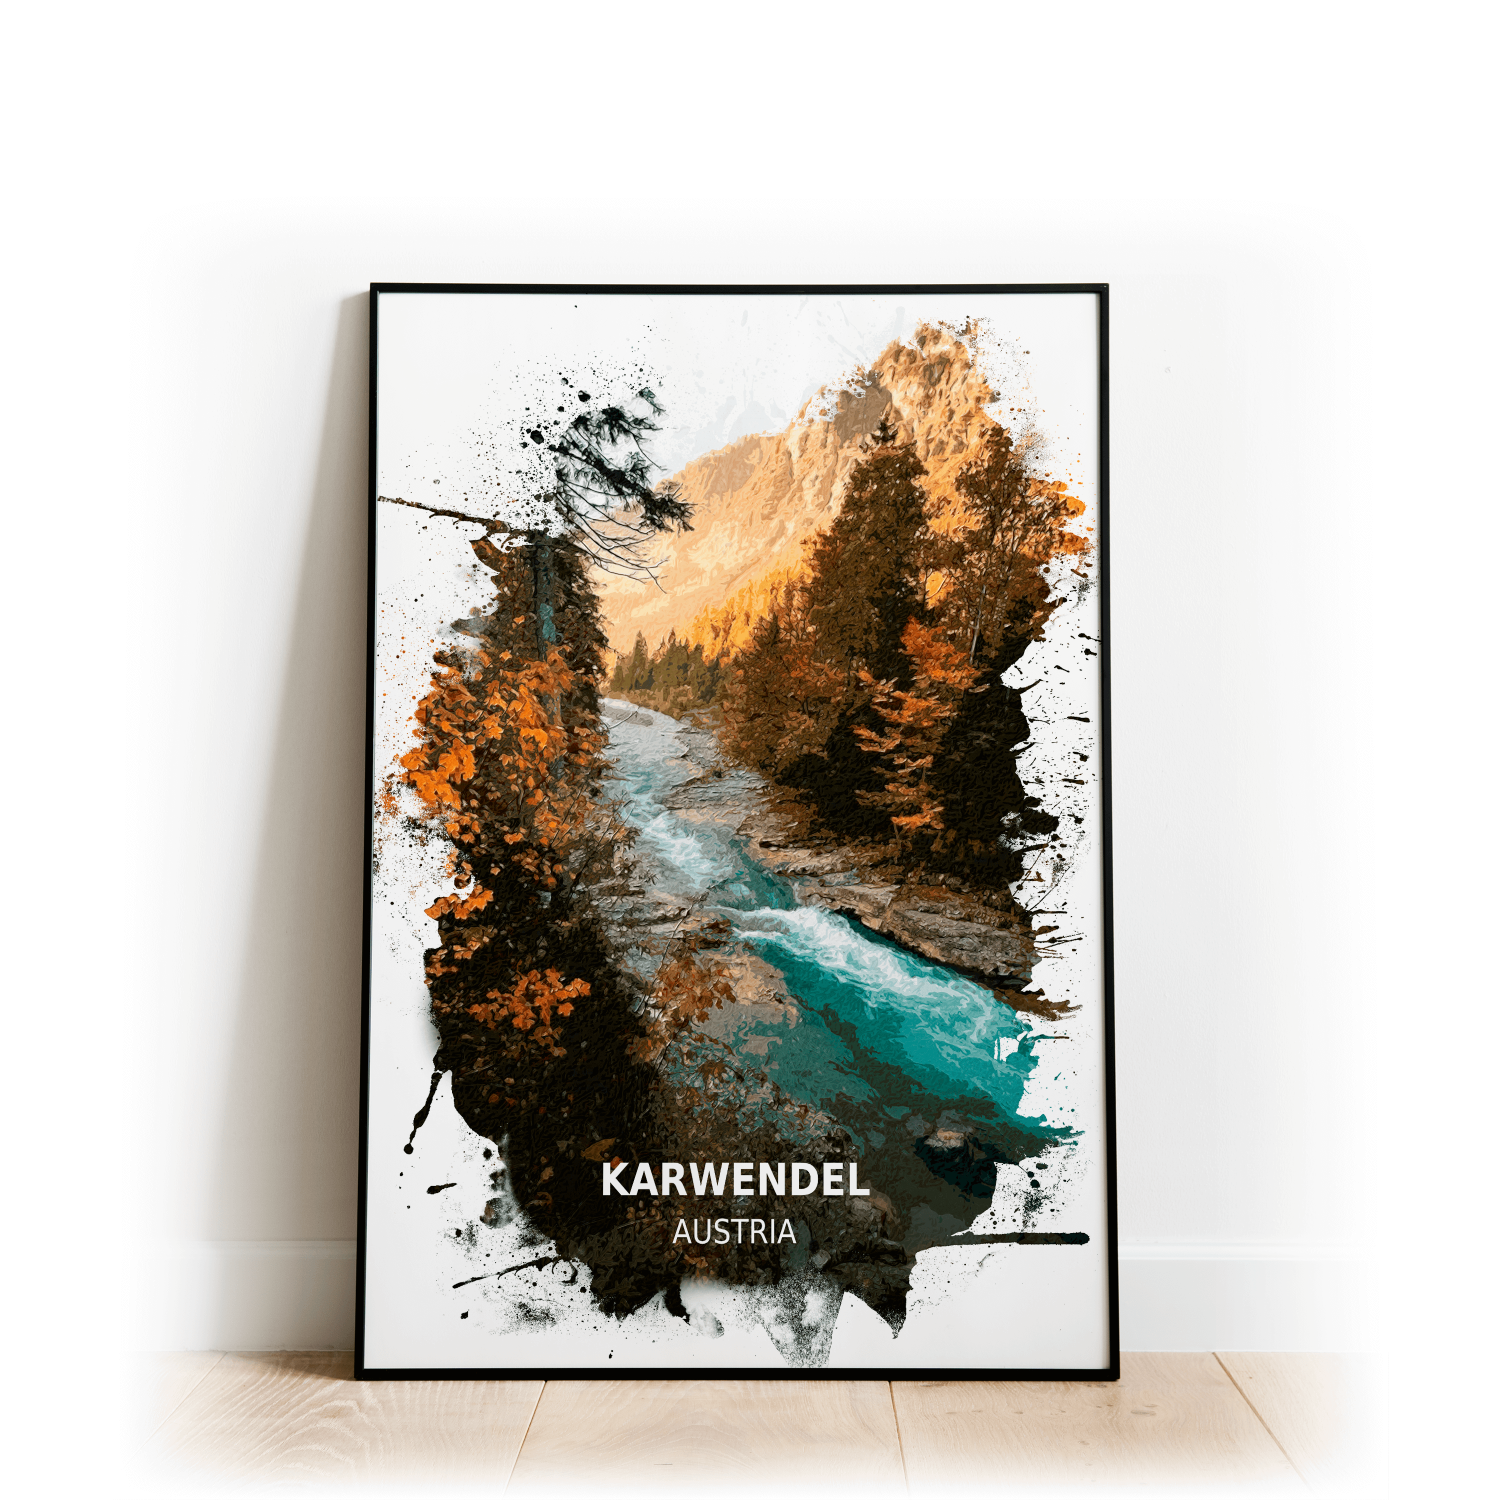 Karwendel - Austria - Print - A4 - Standard - Print Only